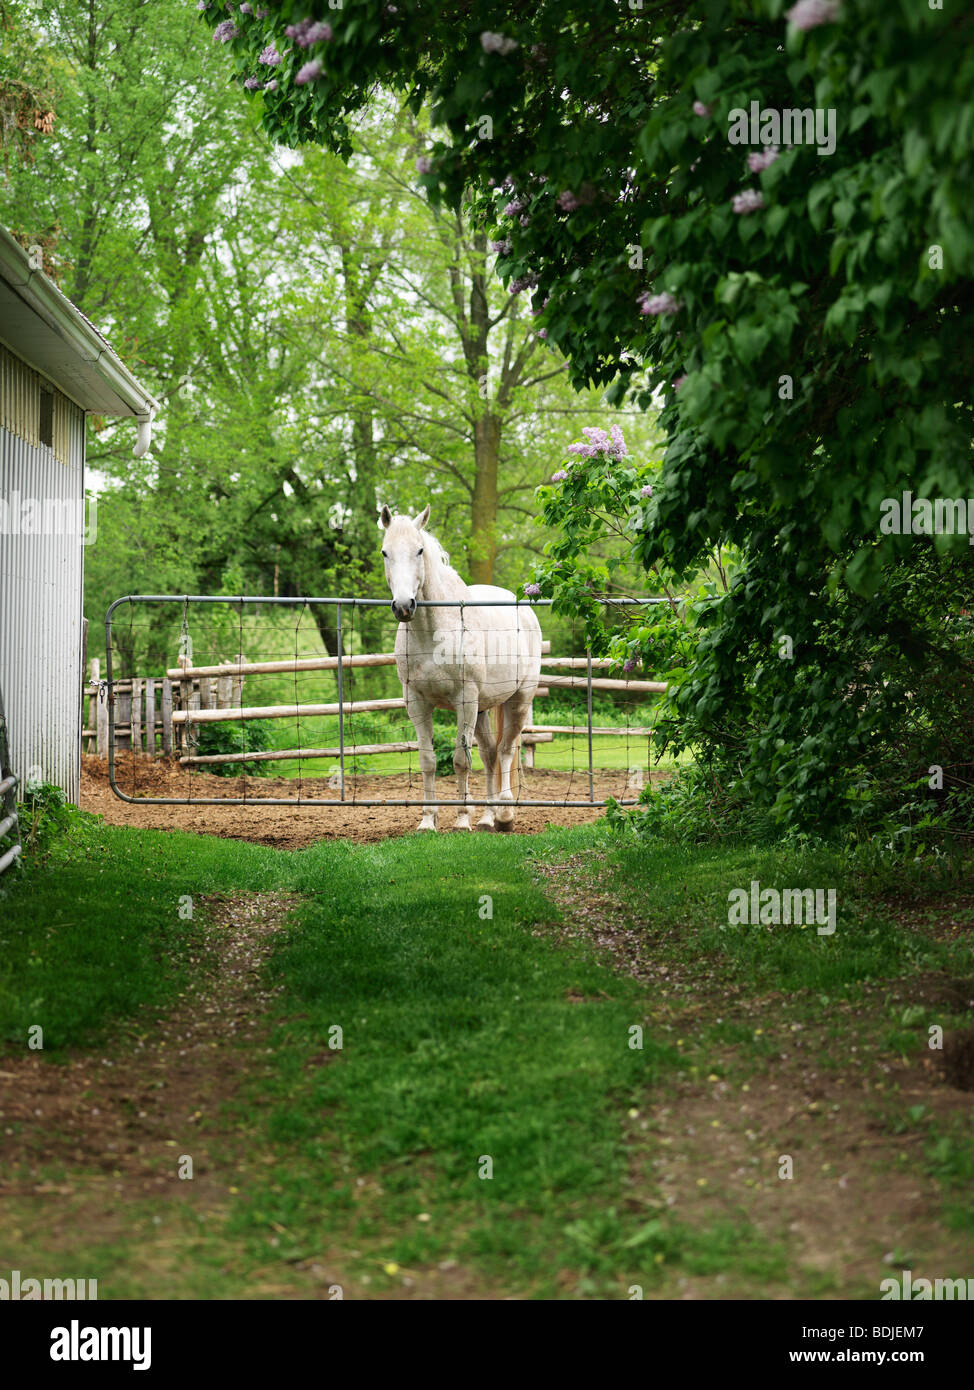 Horse in Pen at Farm Stock Photo